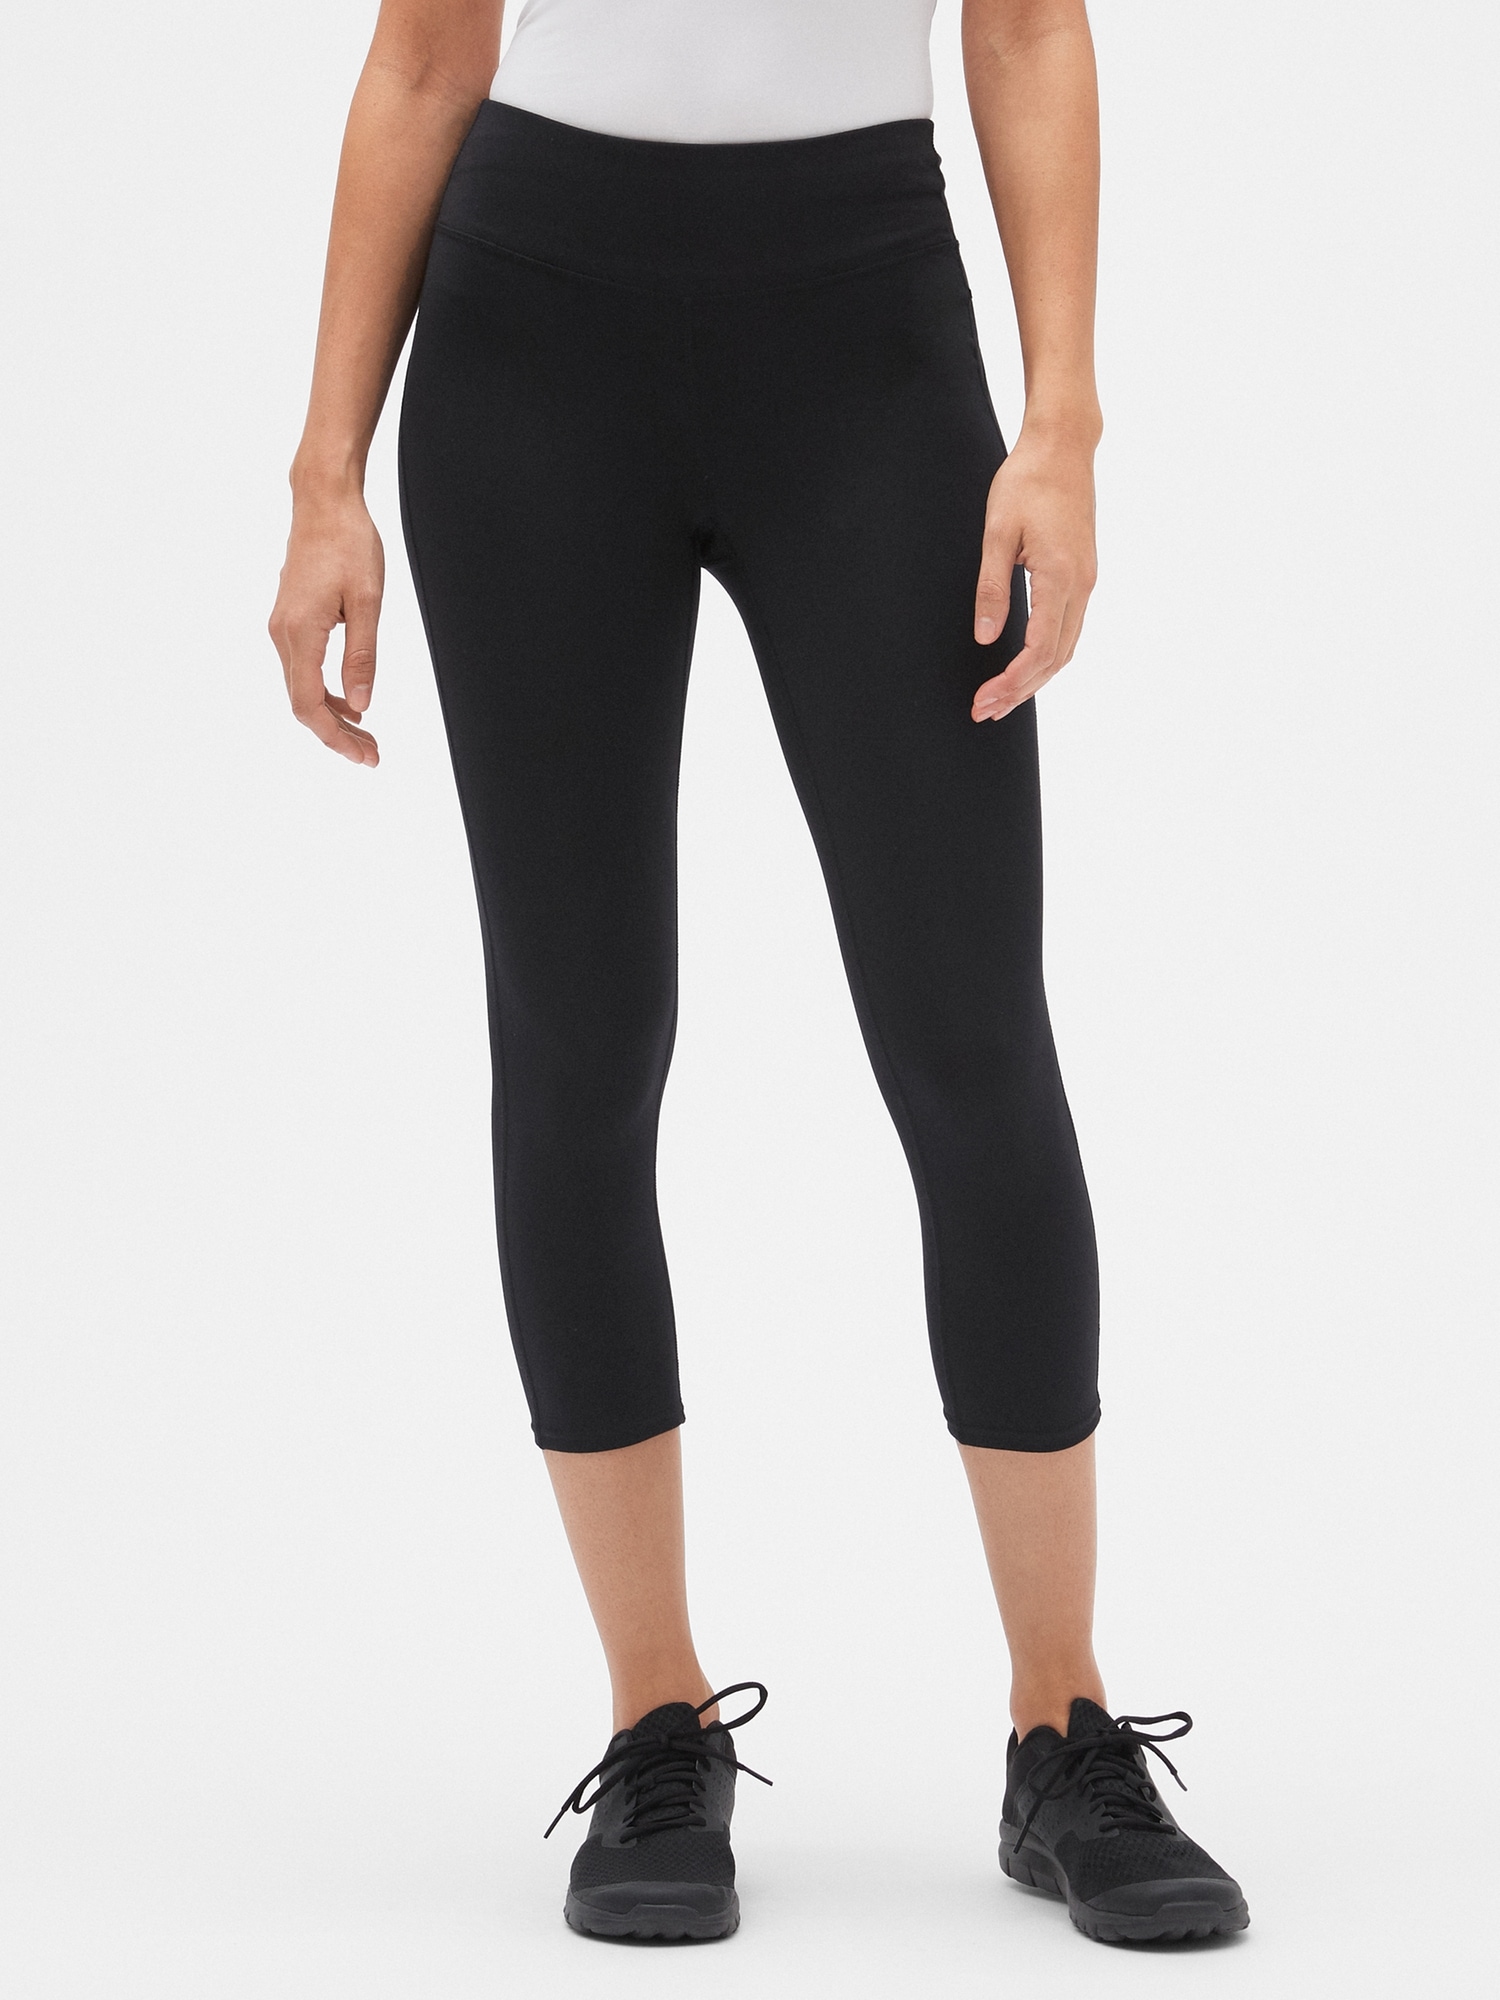 Tek Gear XS~ Capri Leggings ~ Athletic Yoga Pants Black